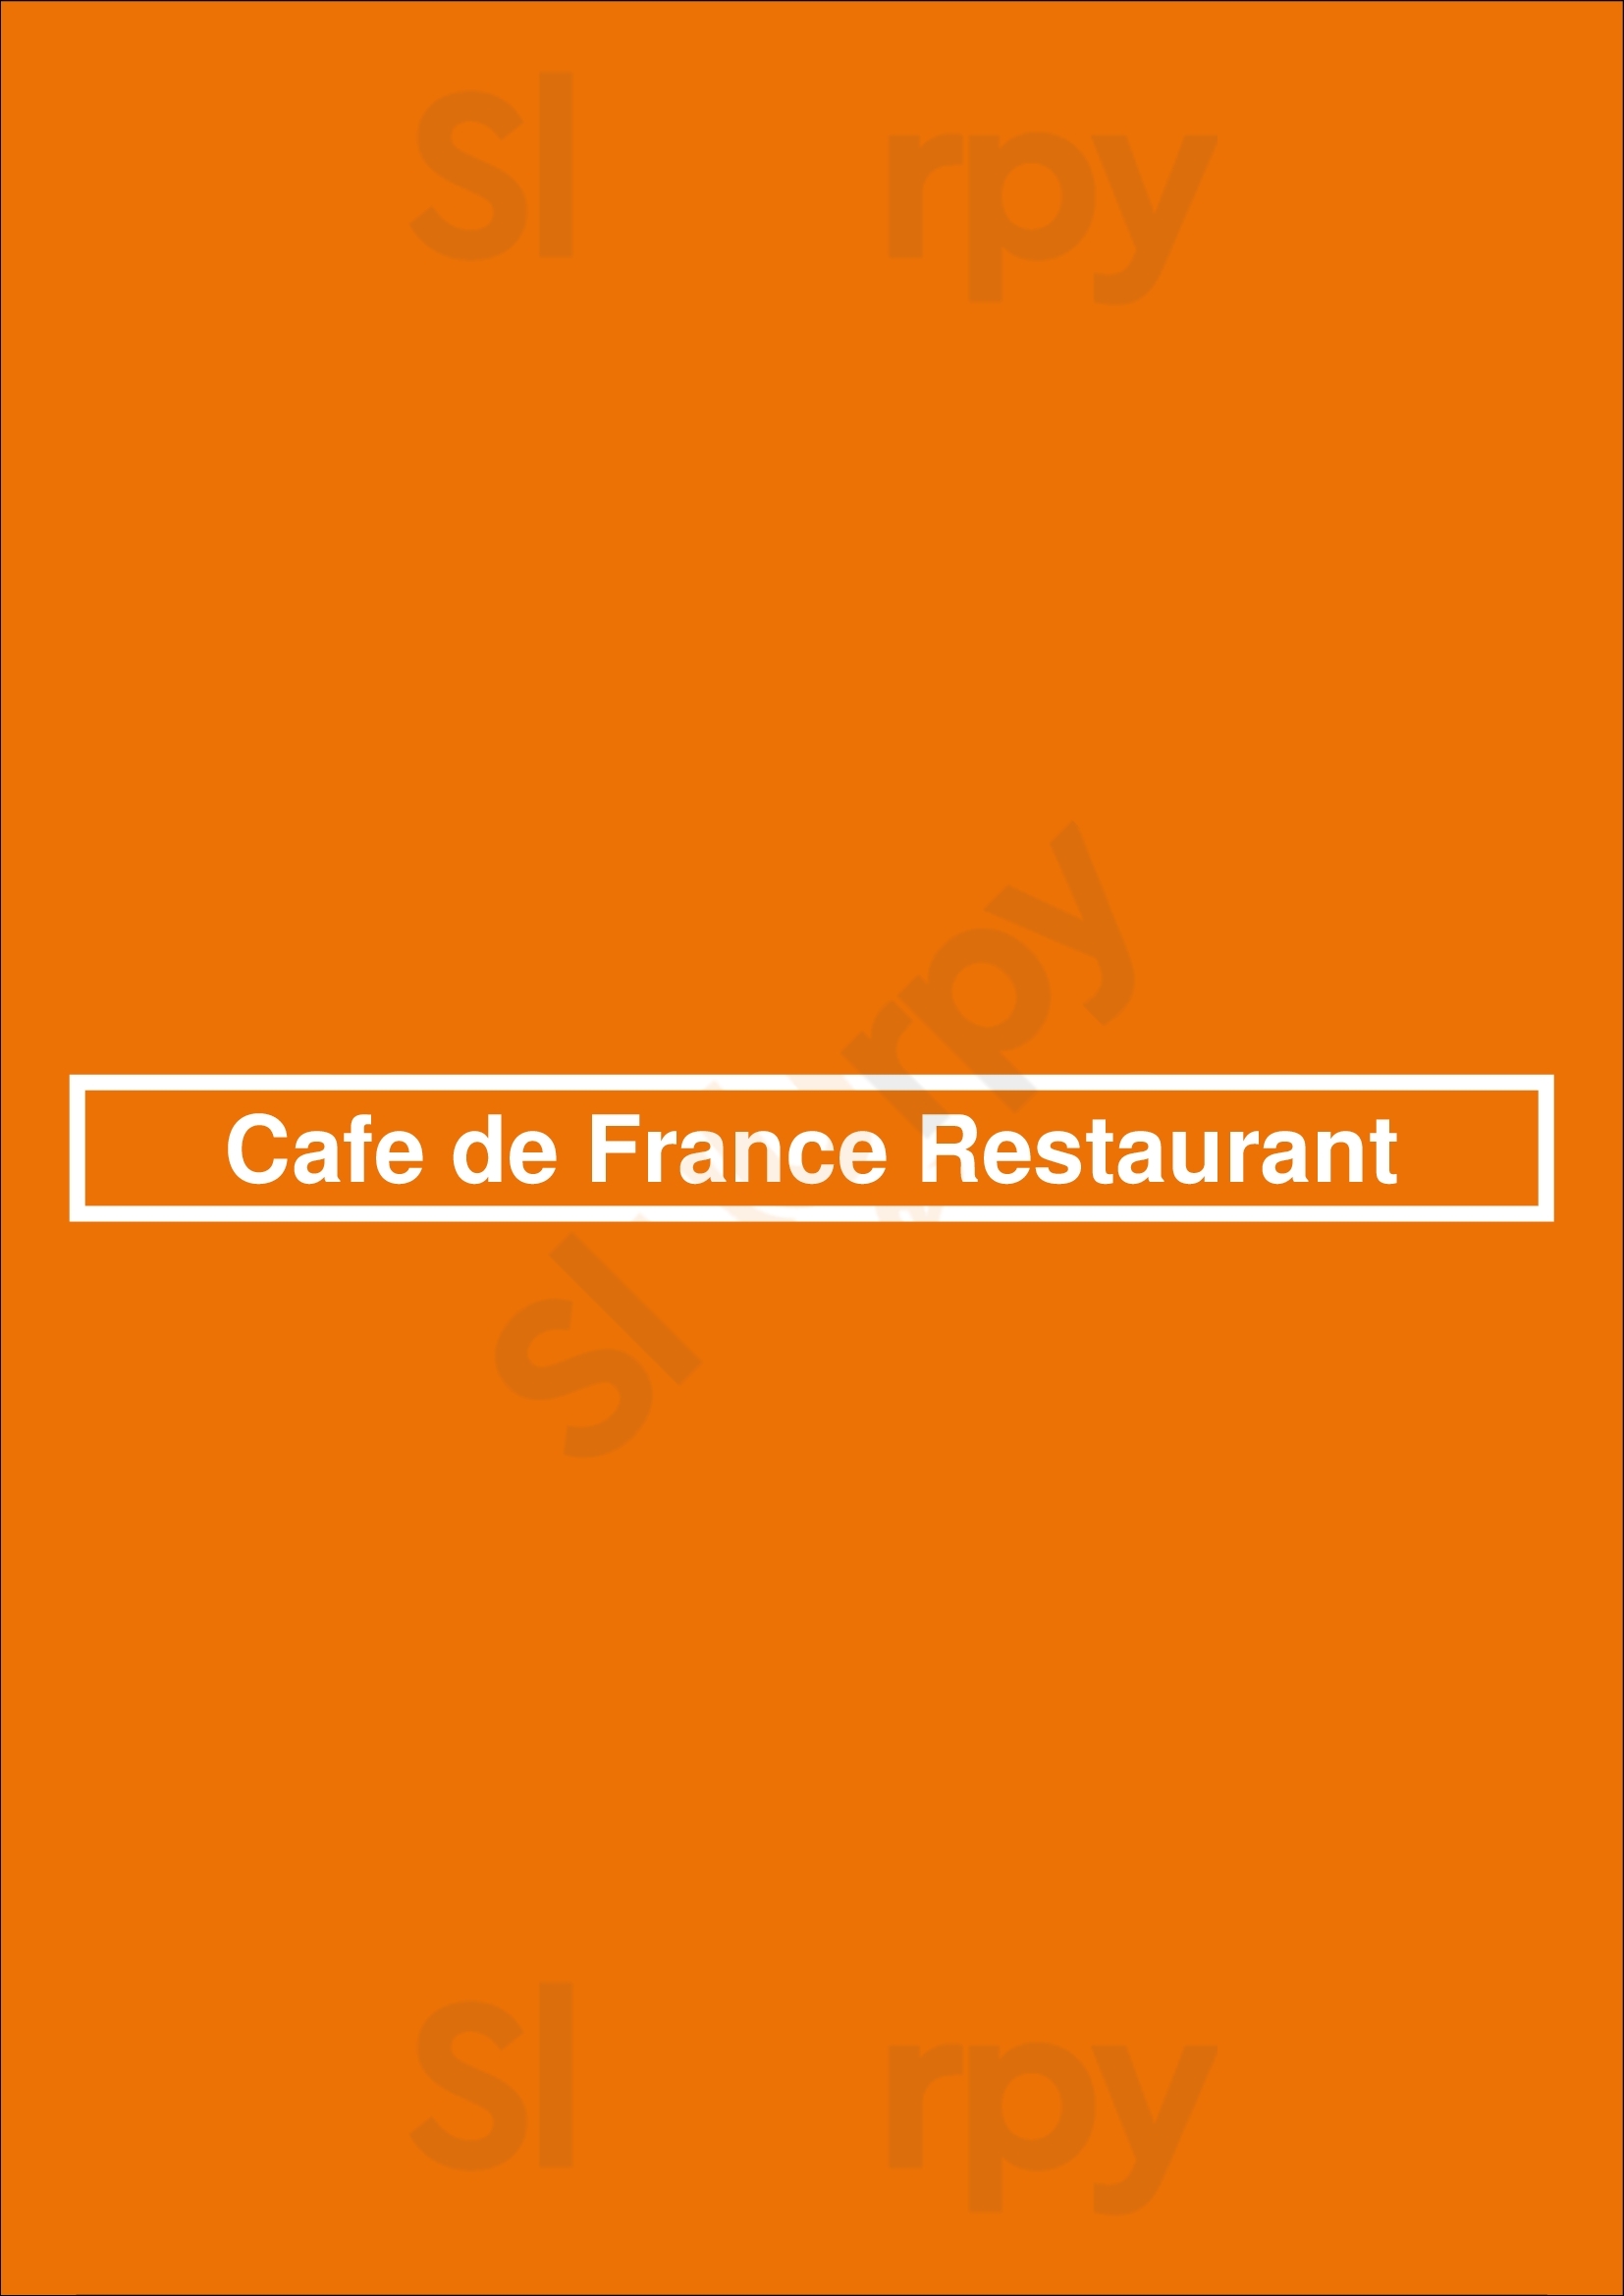 Cafe De France Restaurant Dallas Menu - 1